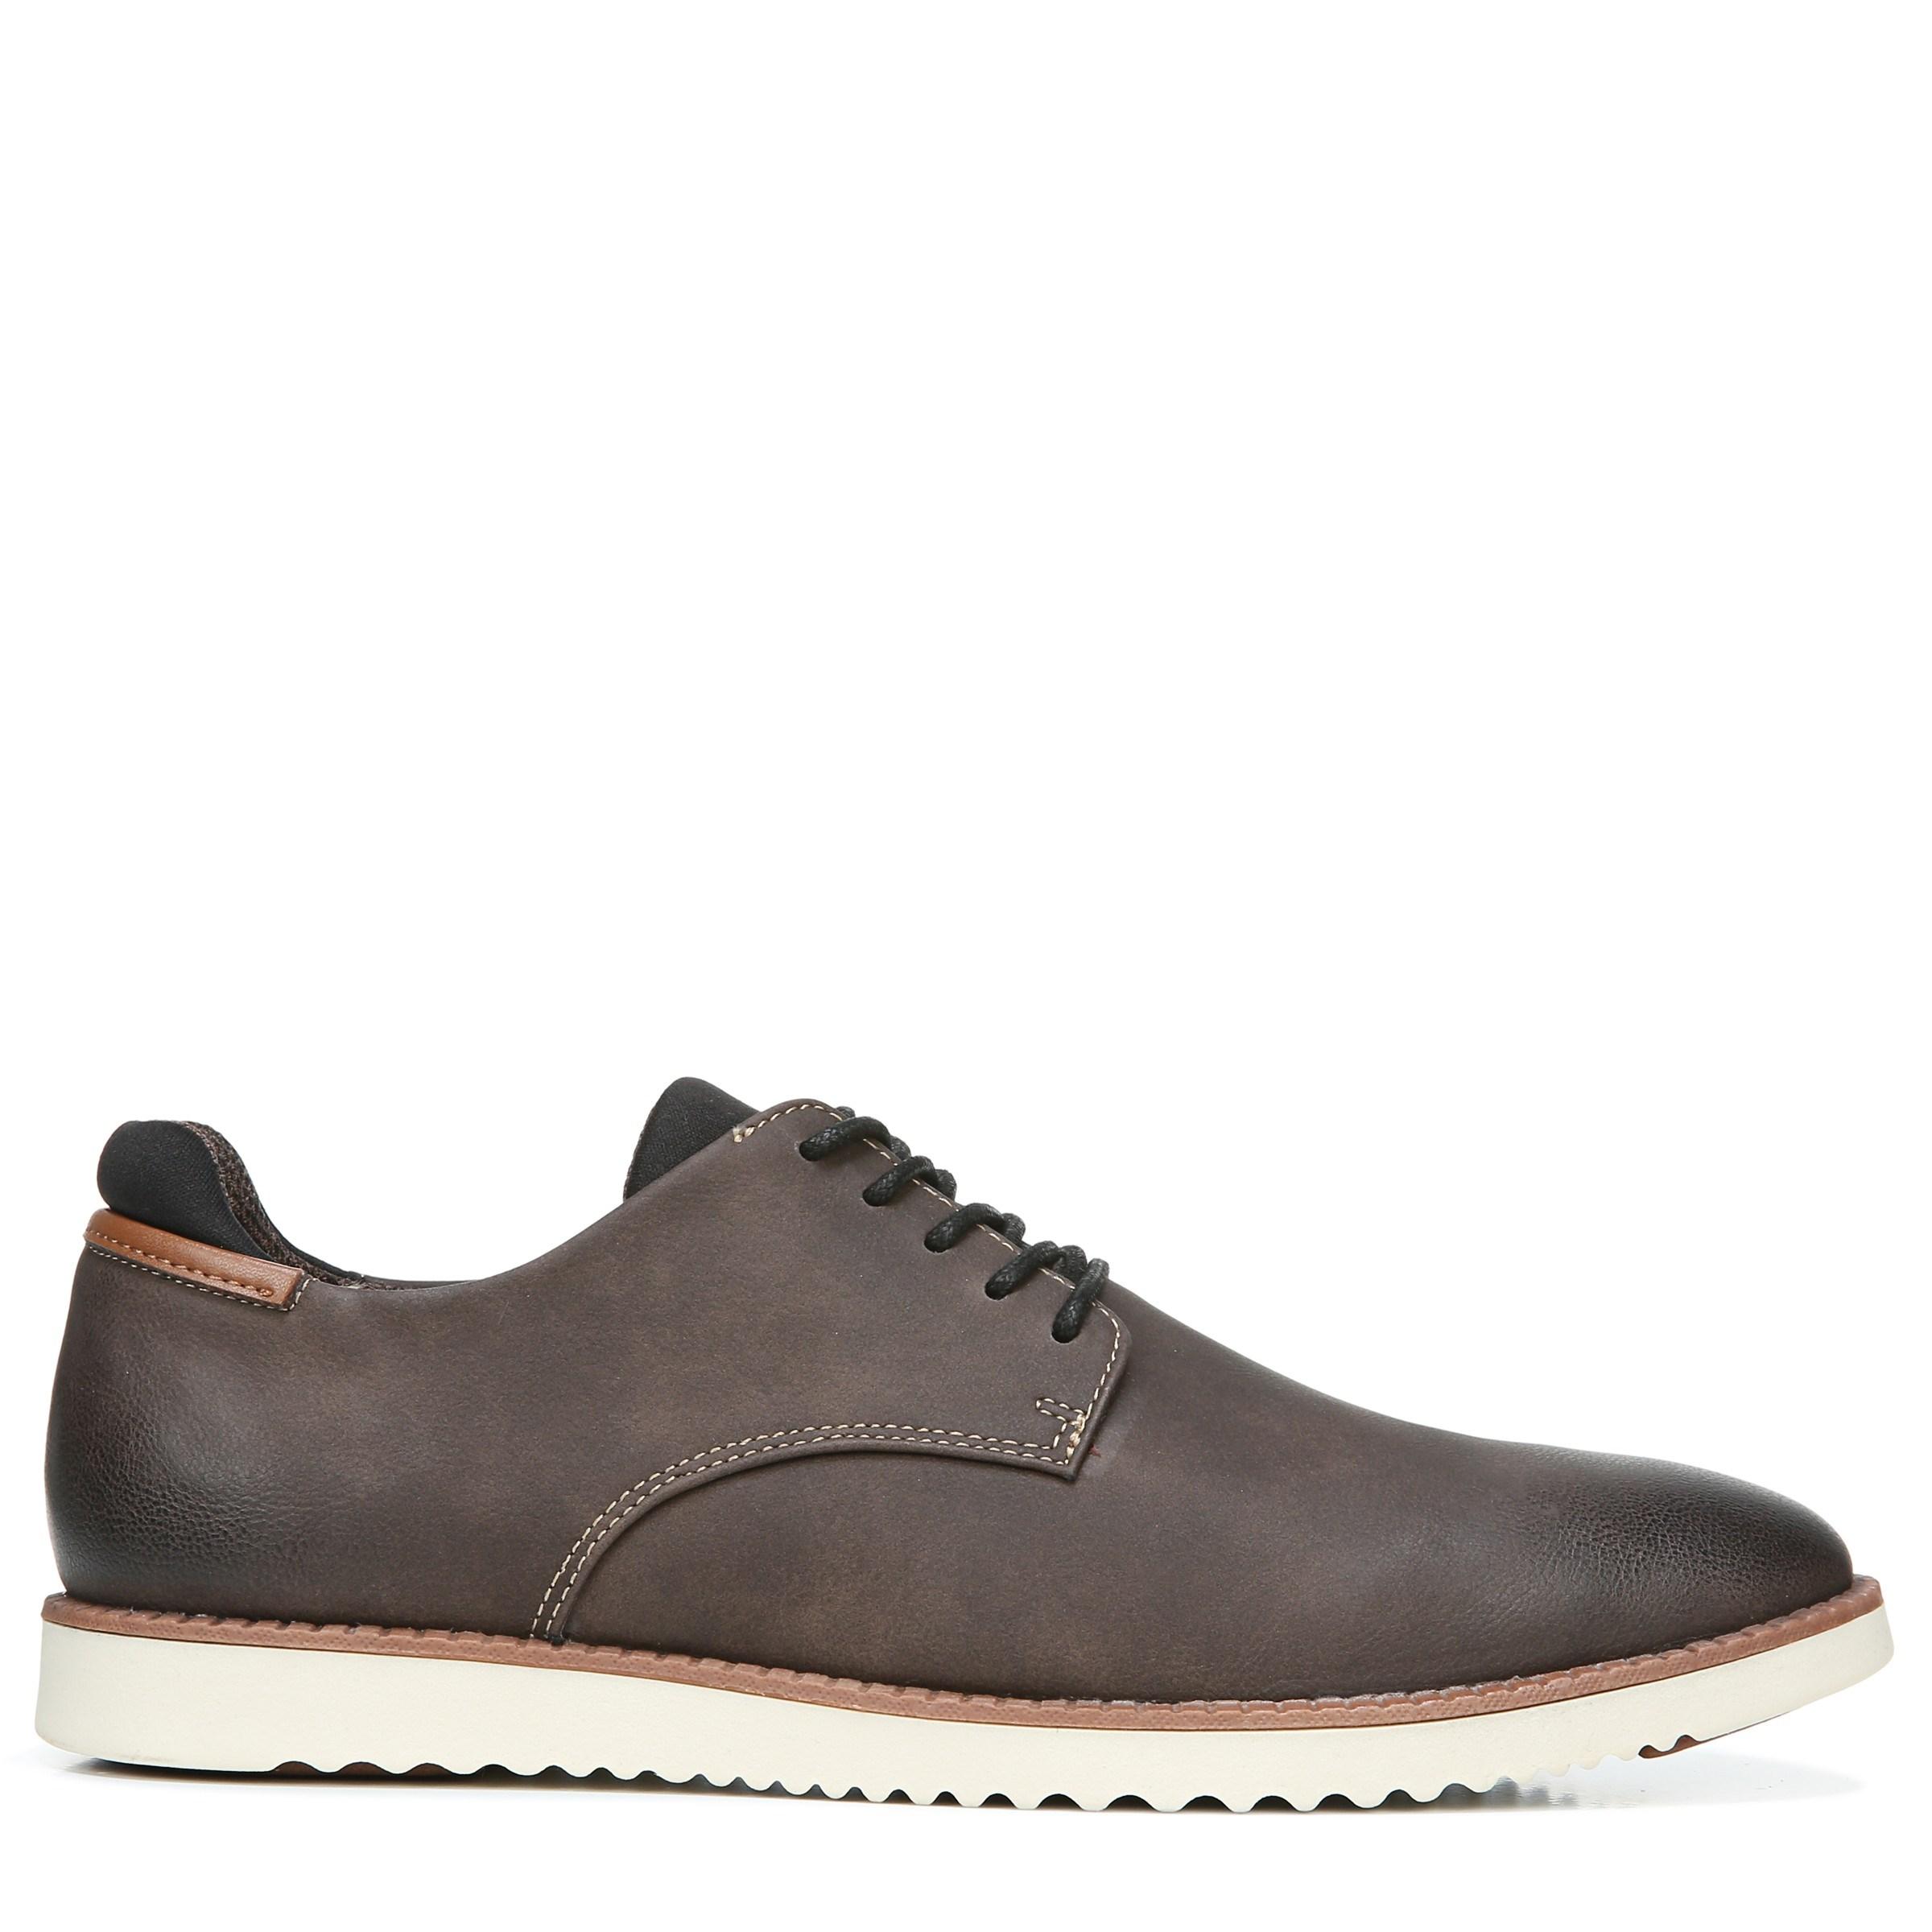 Dr. Scholls Sync Medium/wide Oxford Shoes in Dark Brown (Brown) for Men ...